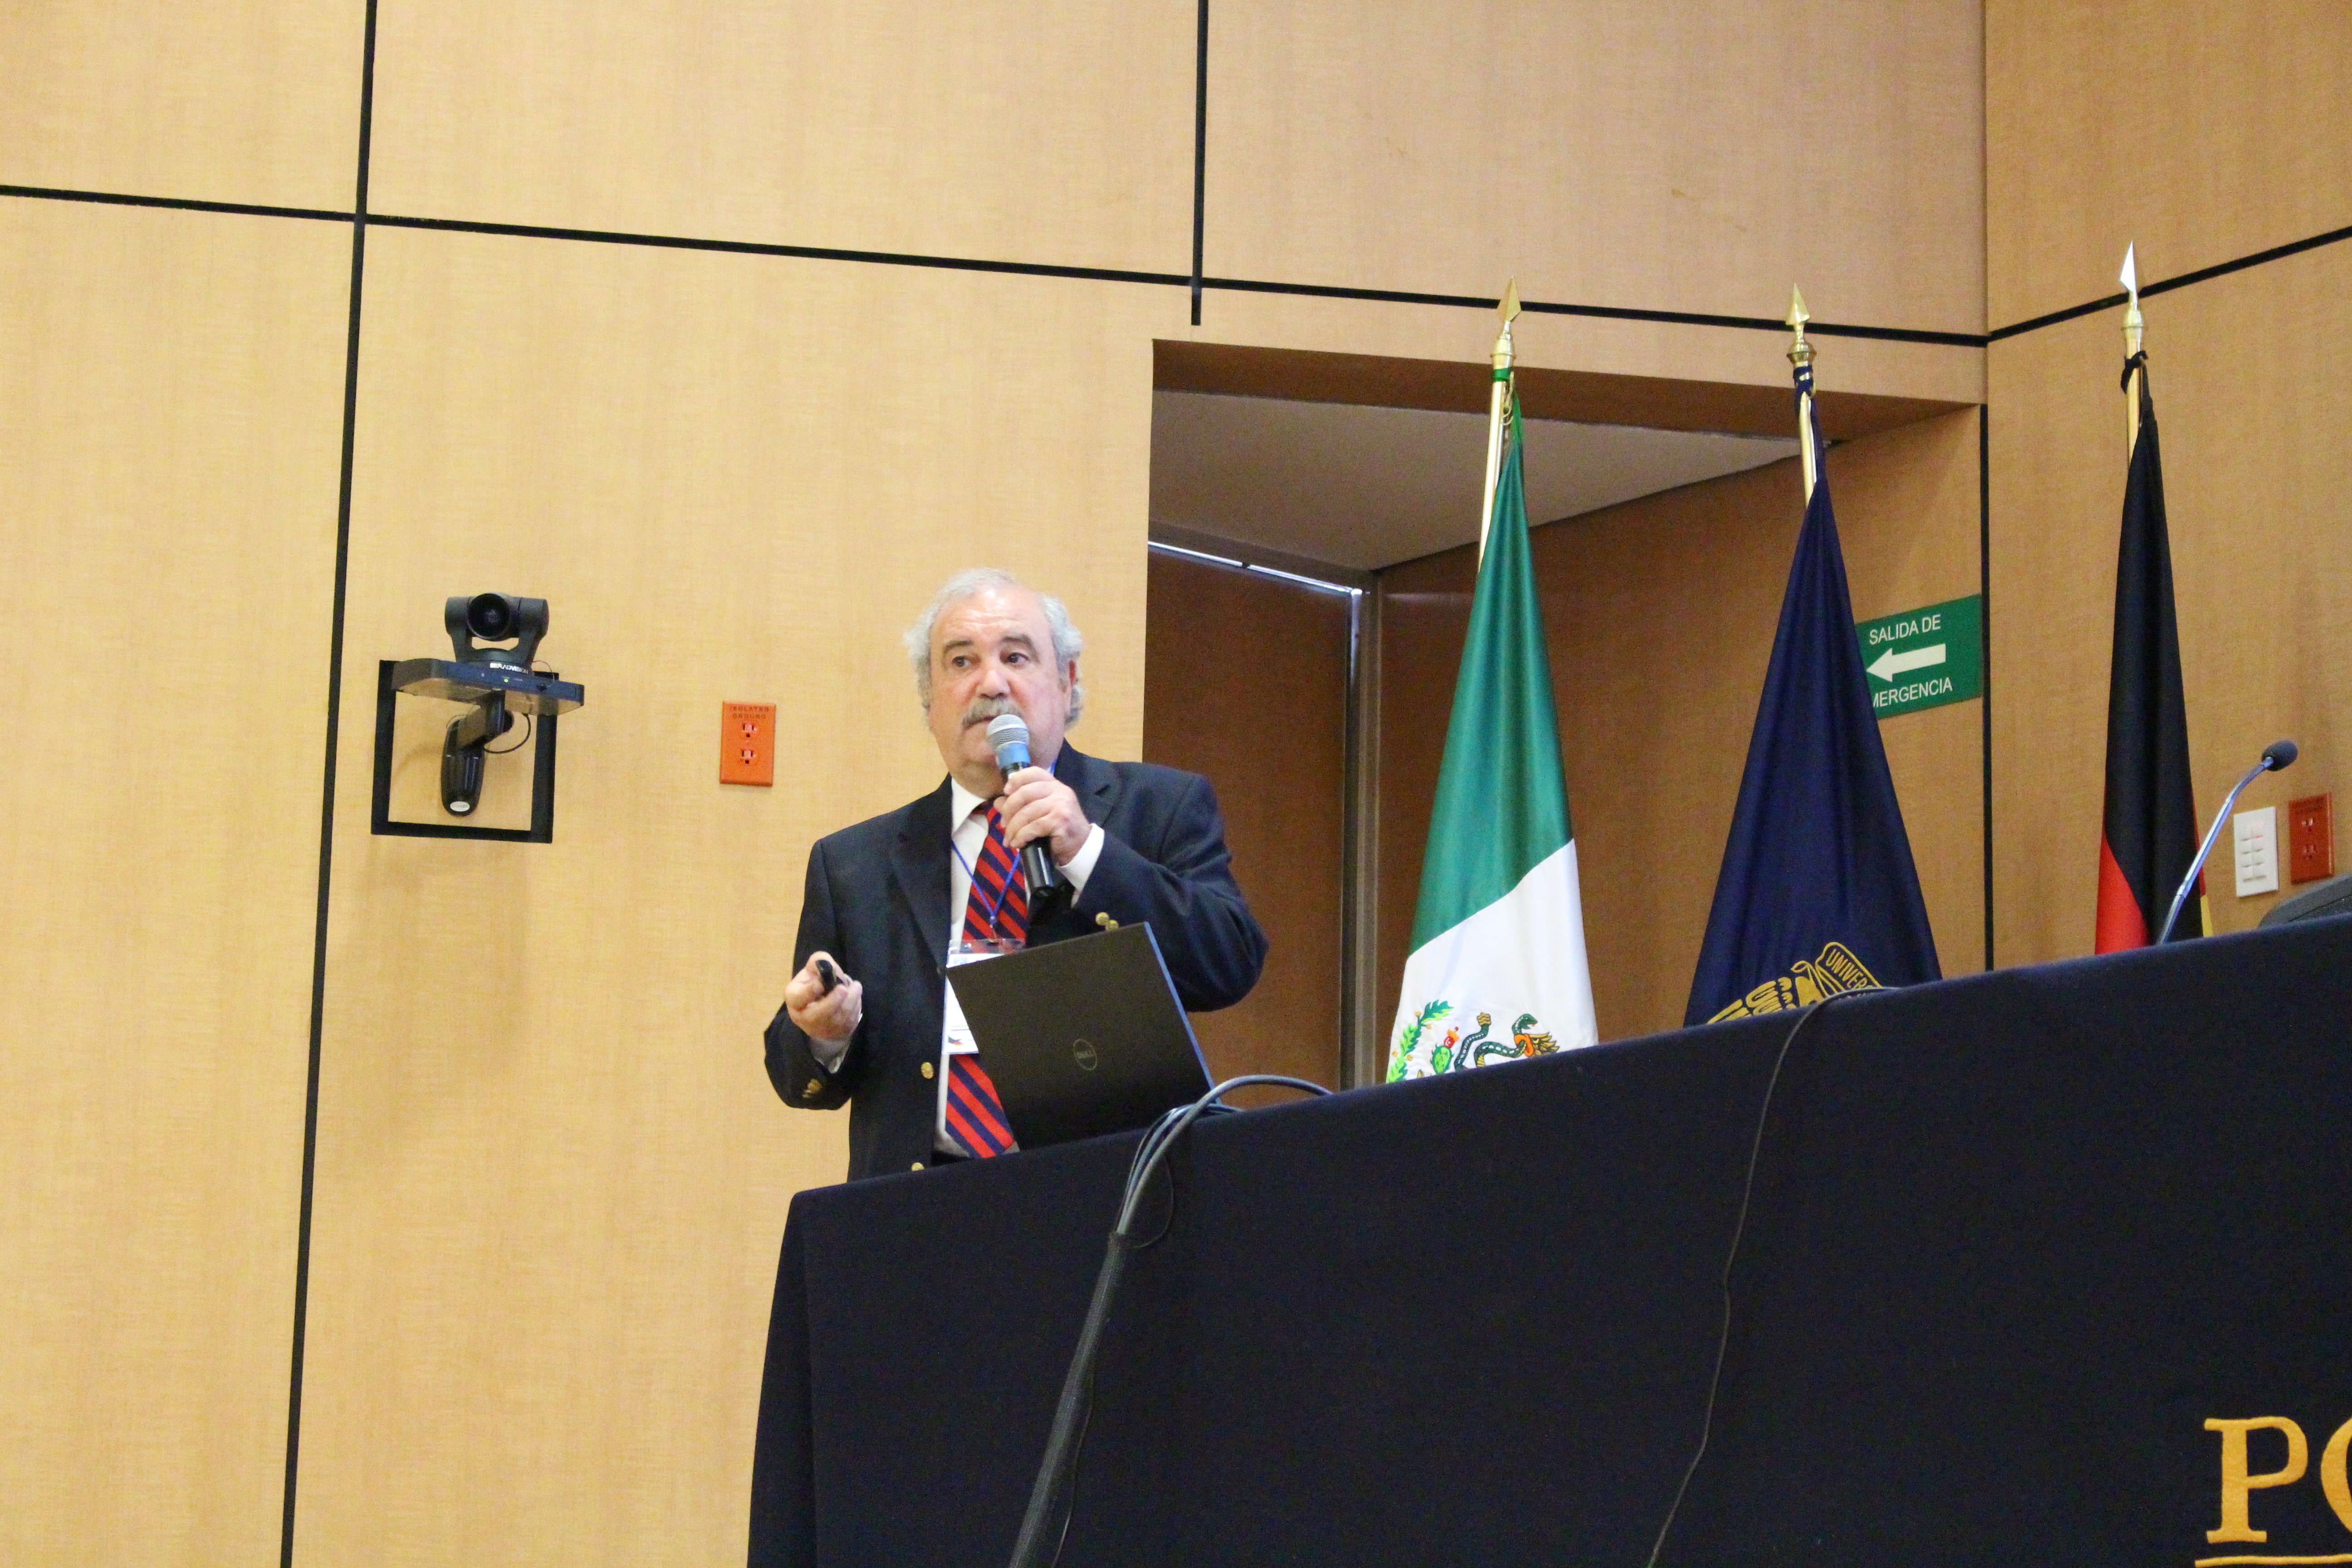 Carlos Arámburo (UNAM) erklärte das UNAM-Förderprogramm PAPIIT